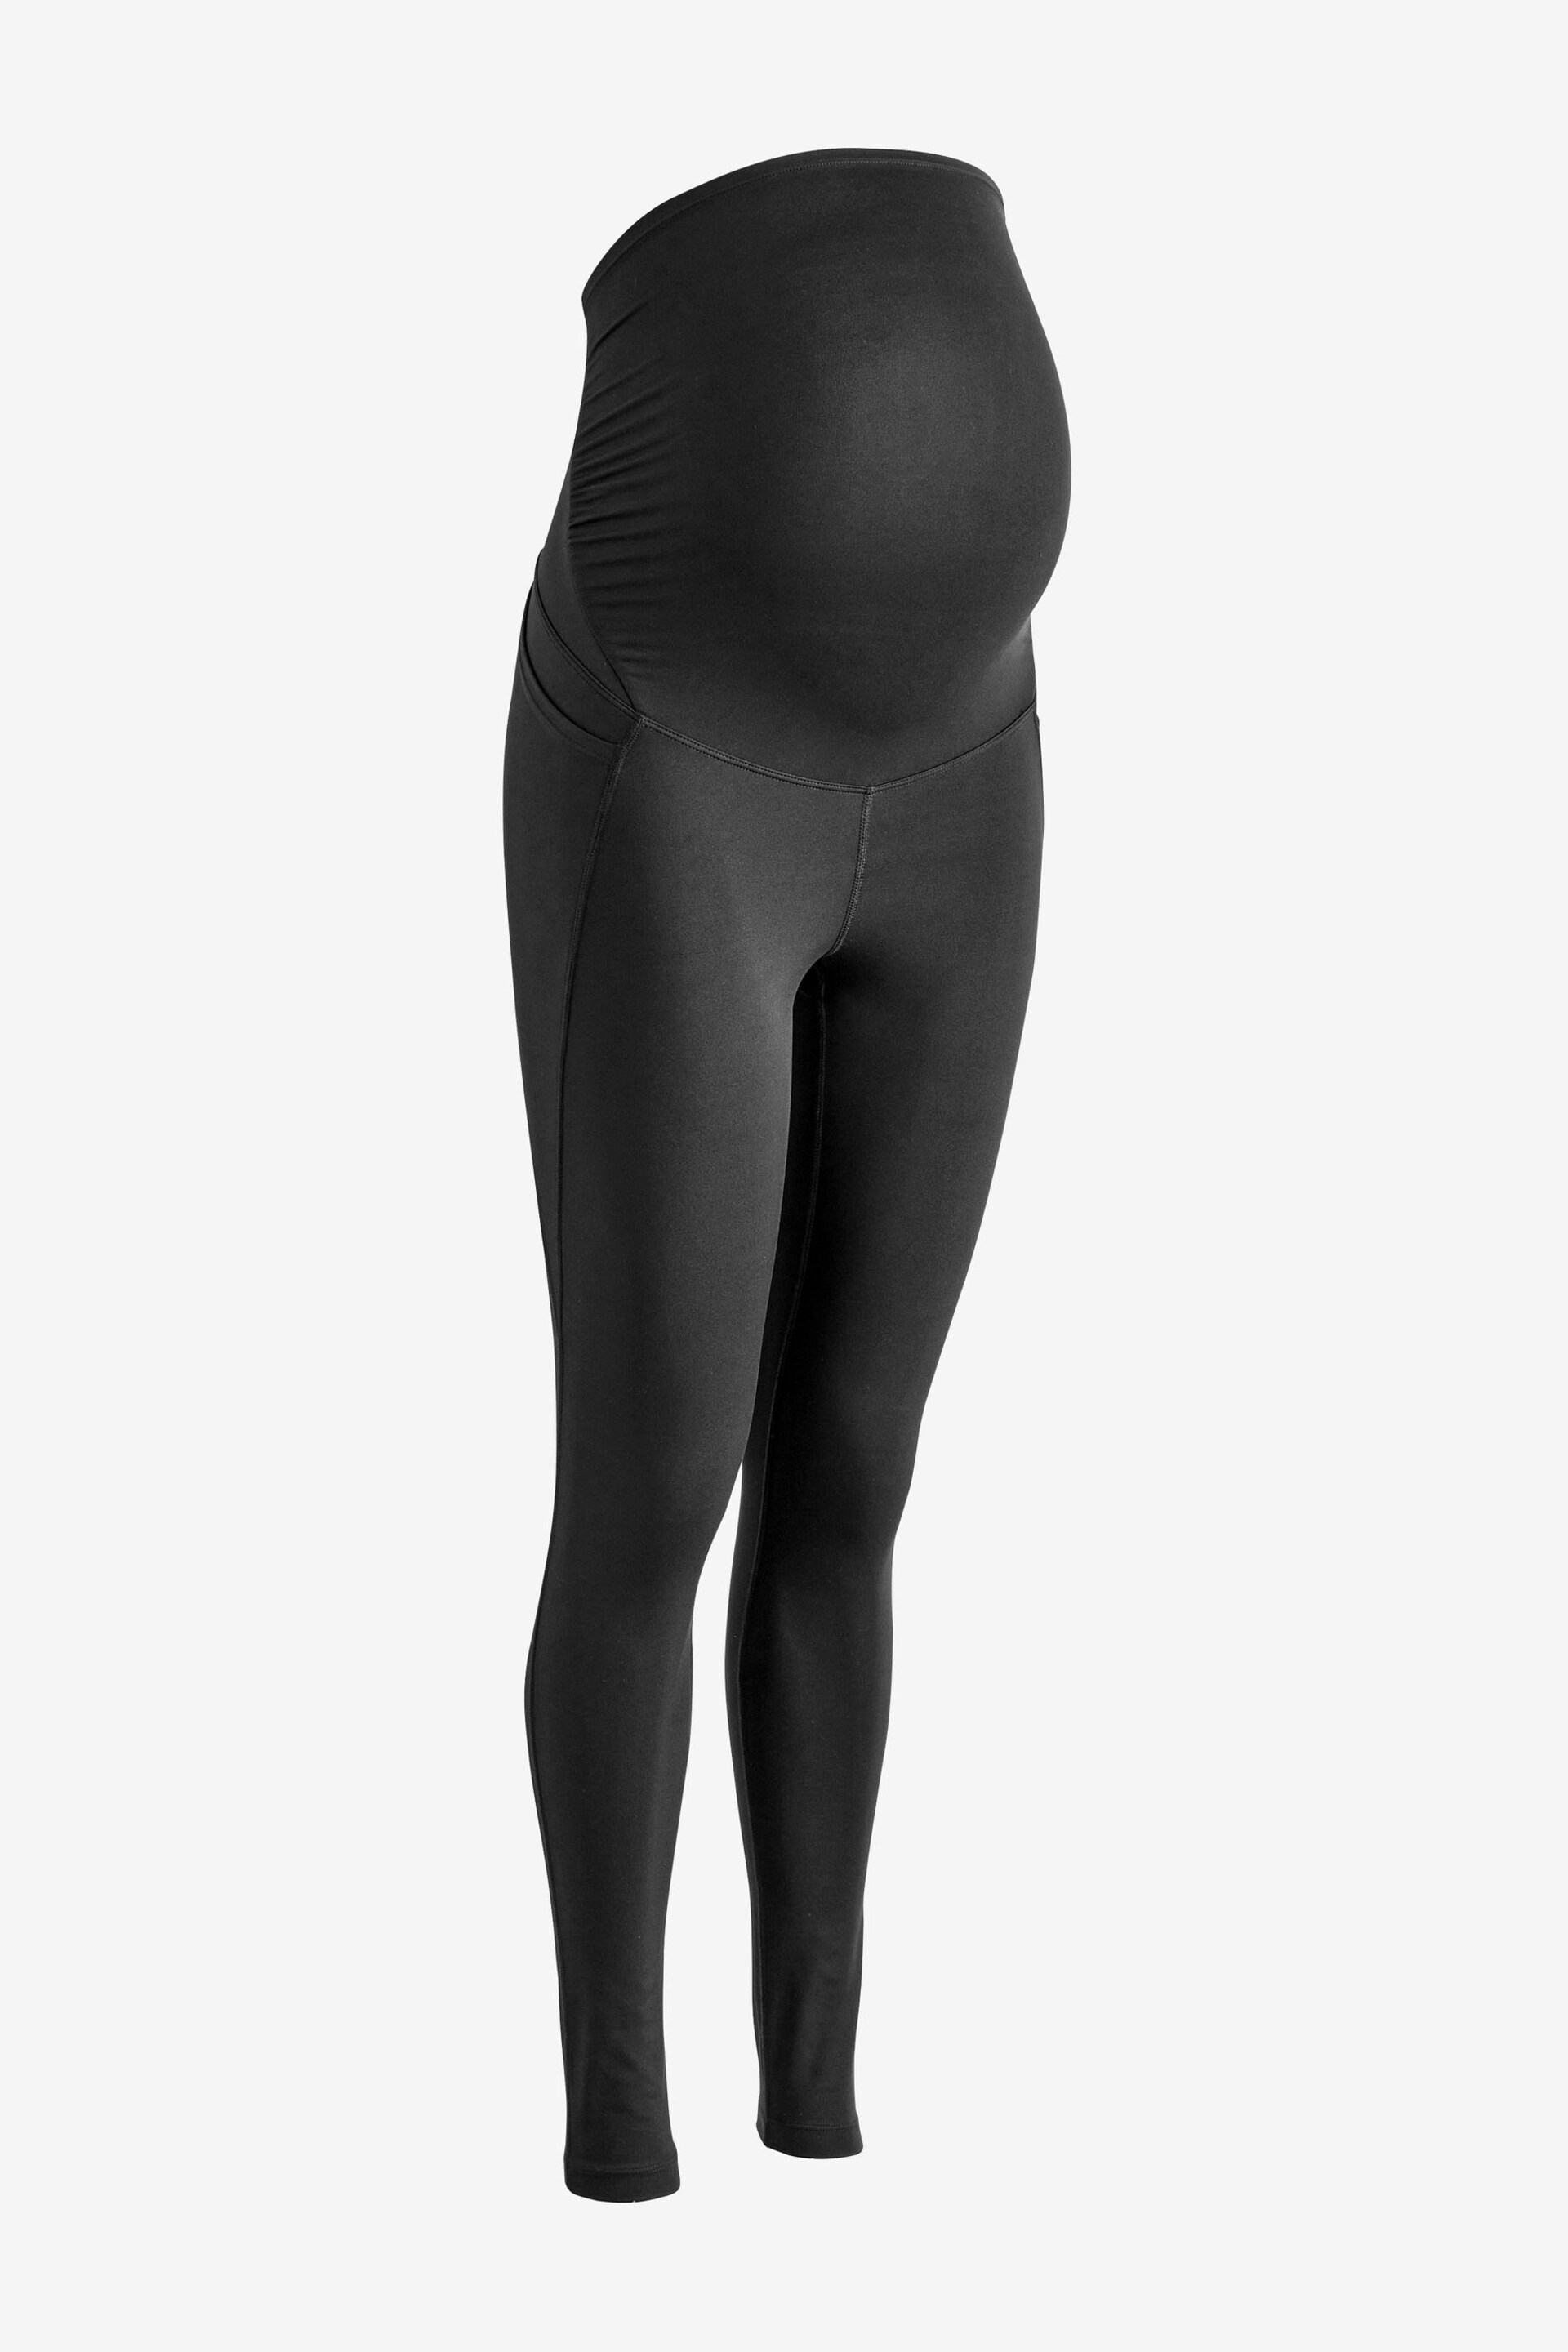 Seraphine Black Bump & Back Support Maternity Black Leggings - Image 5 of 5